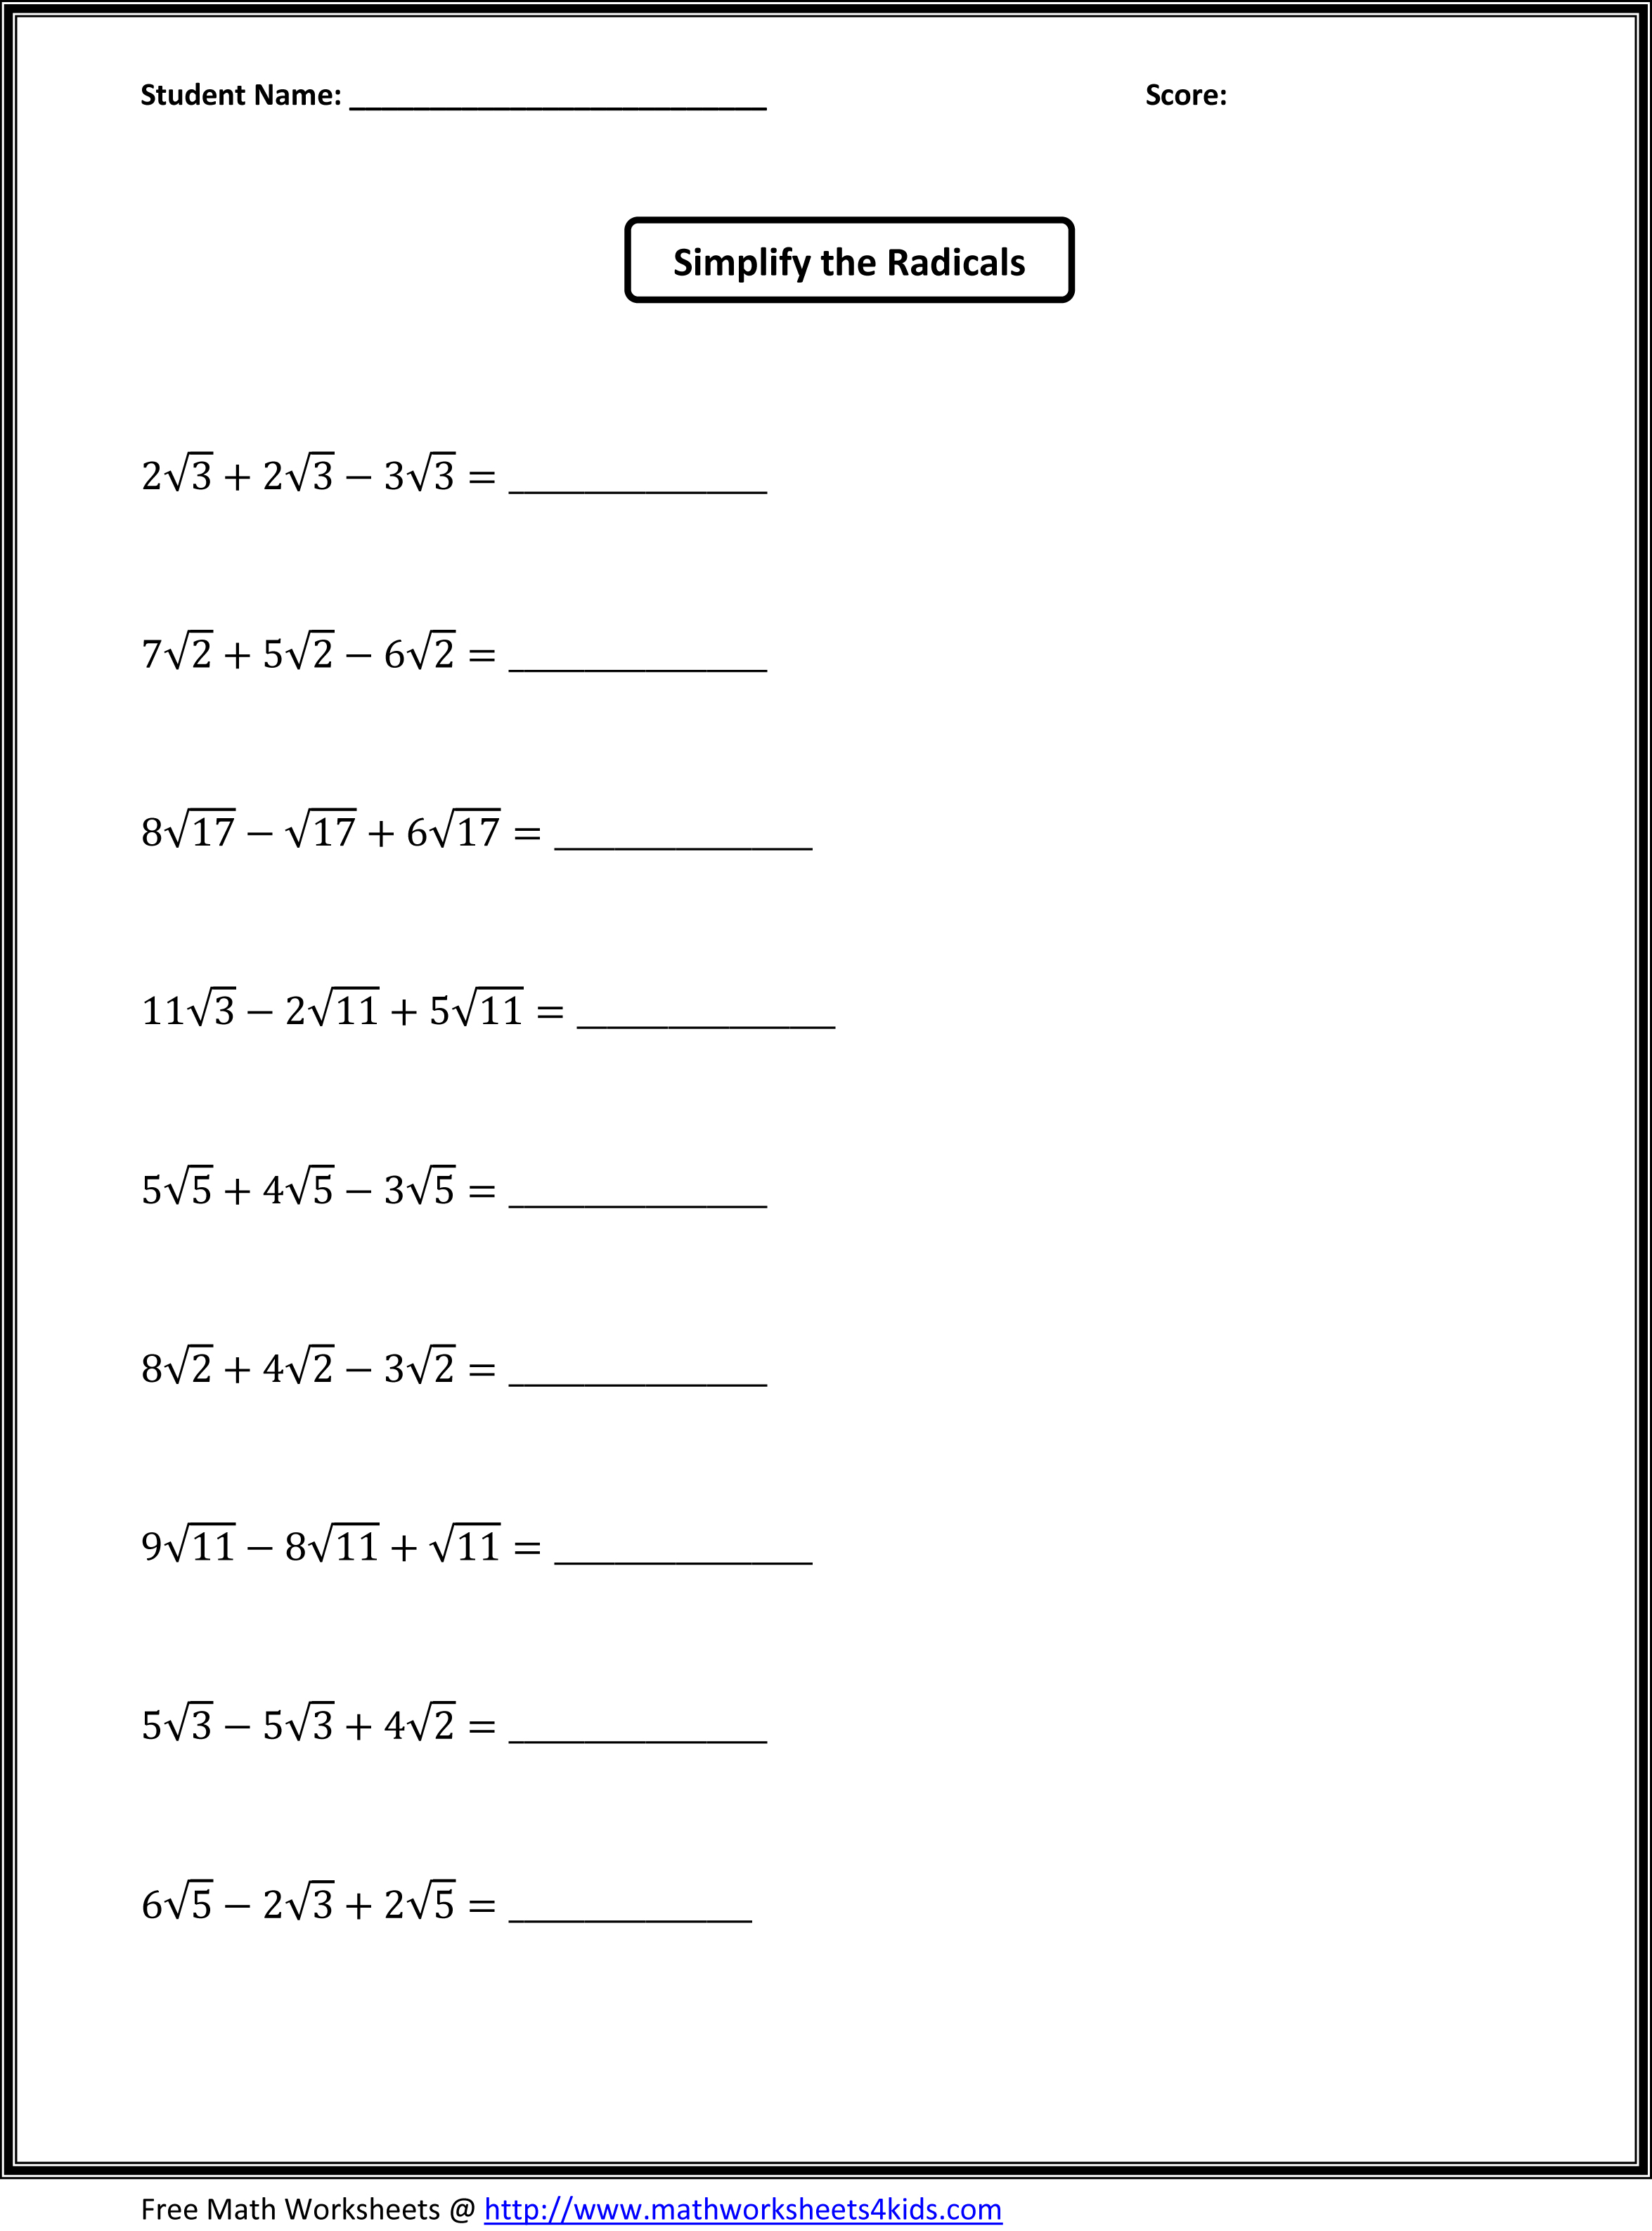 the-best-7th-grade-math-worksheets-make-sense-of-math